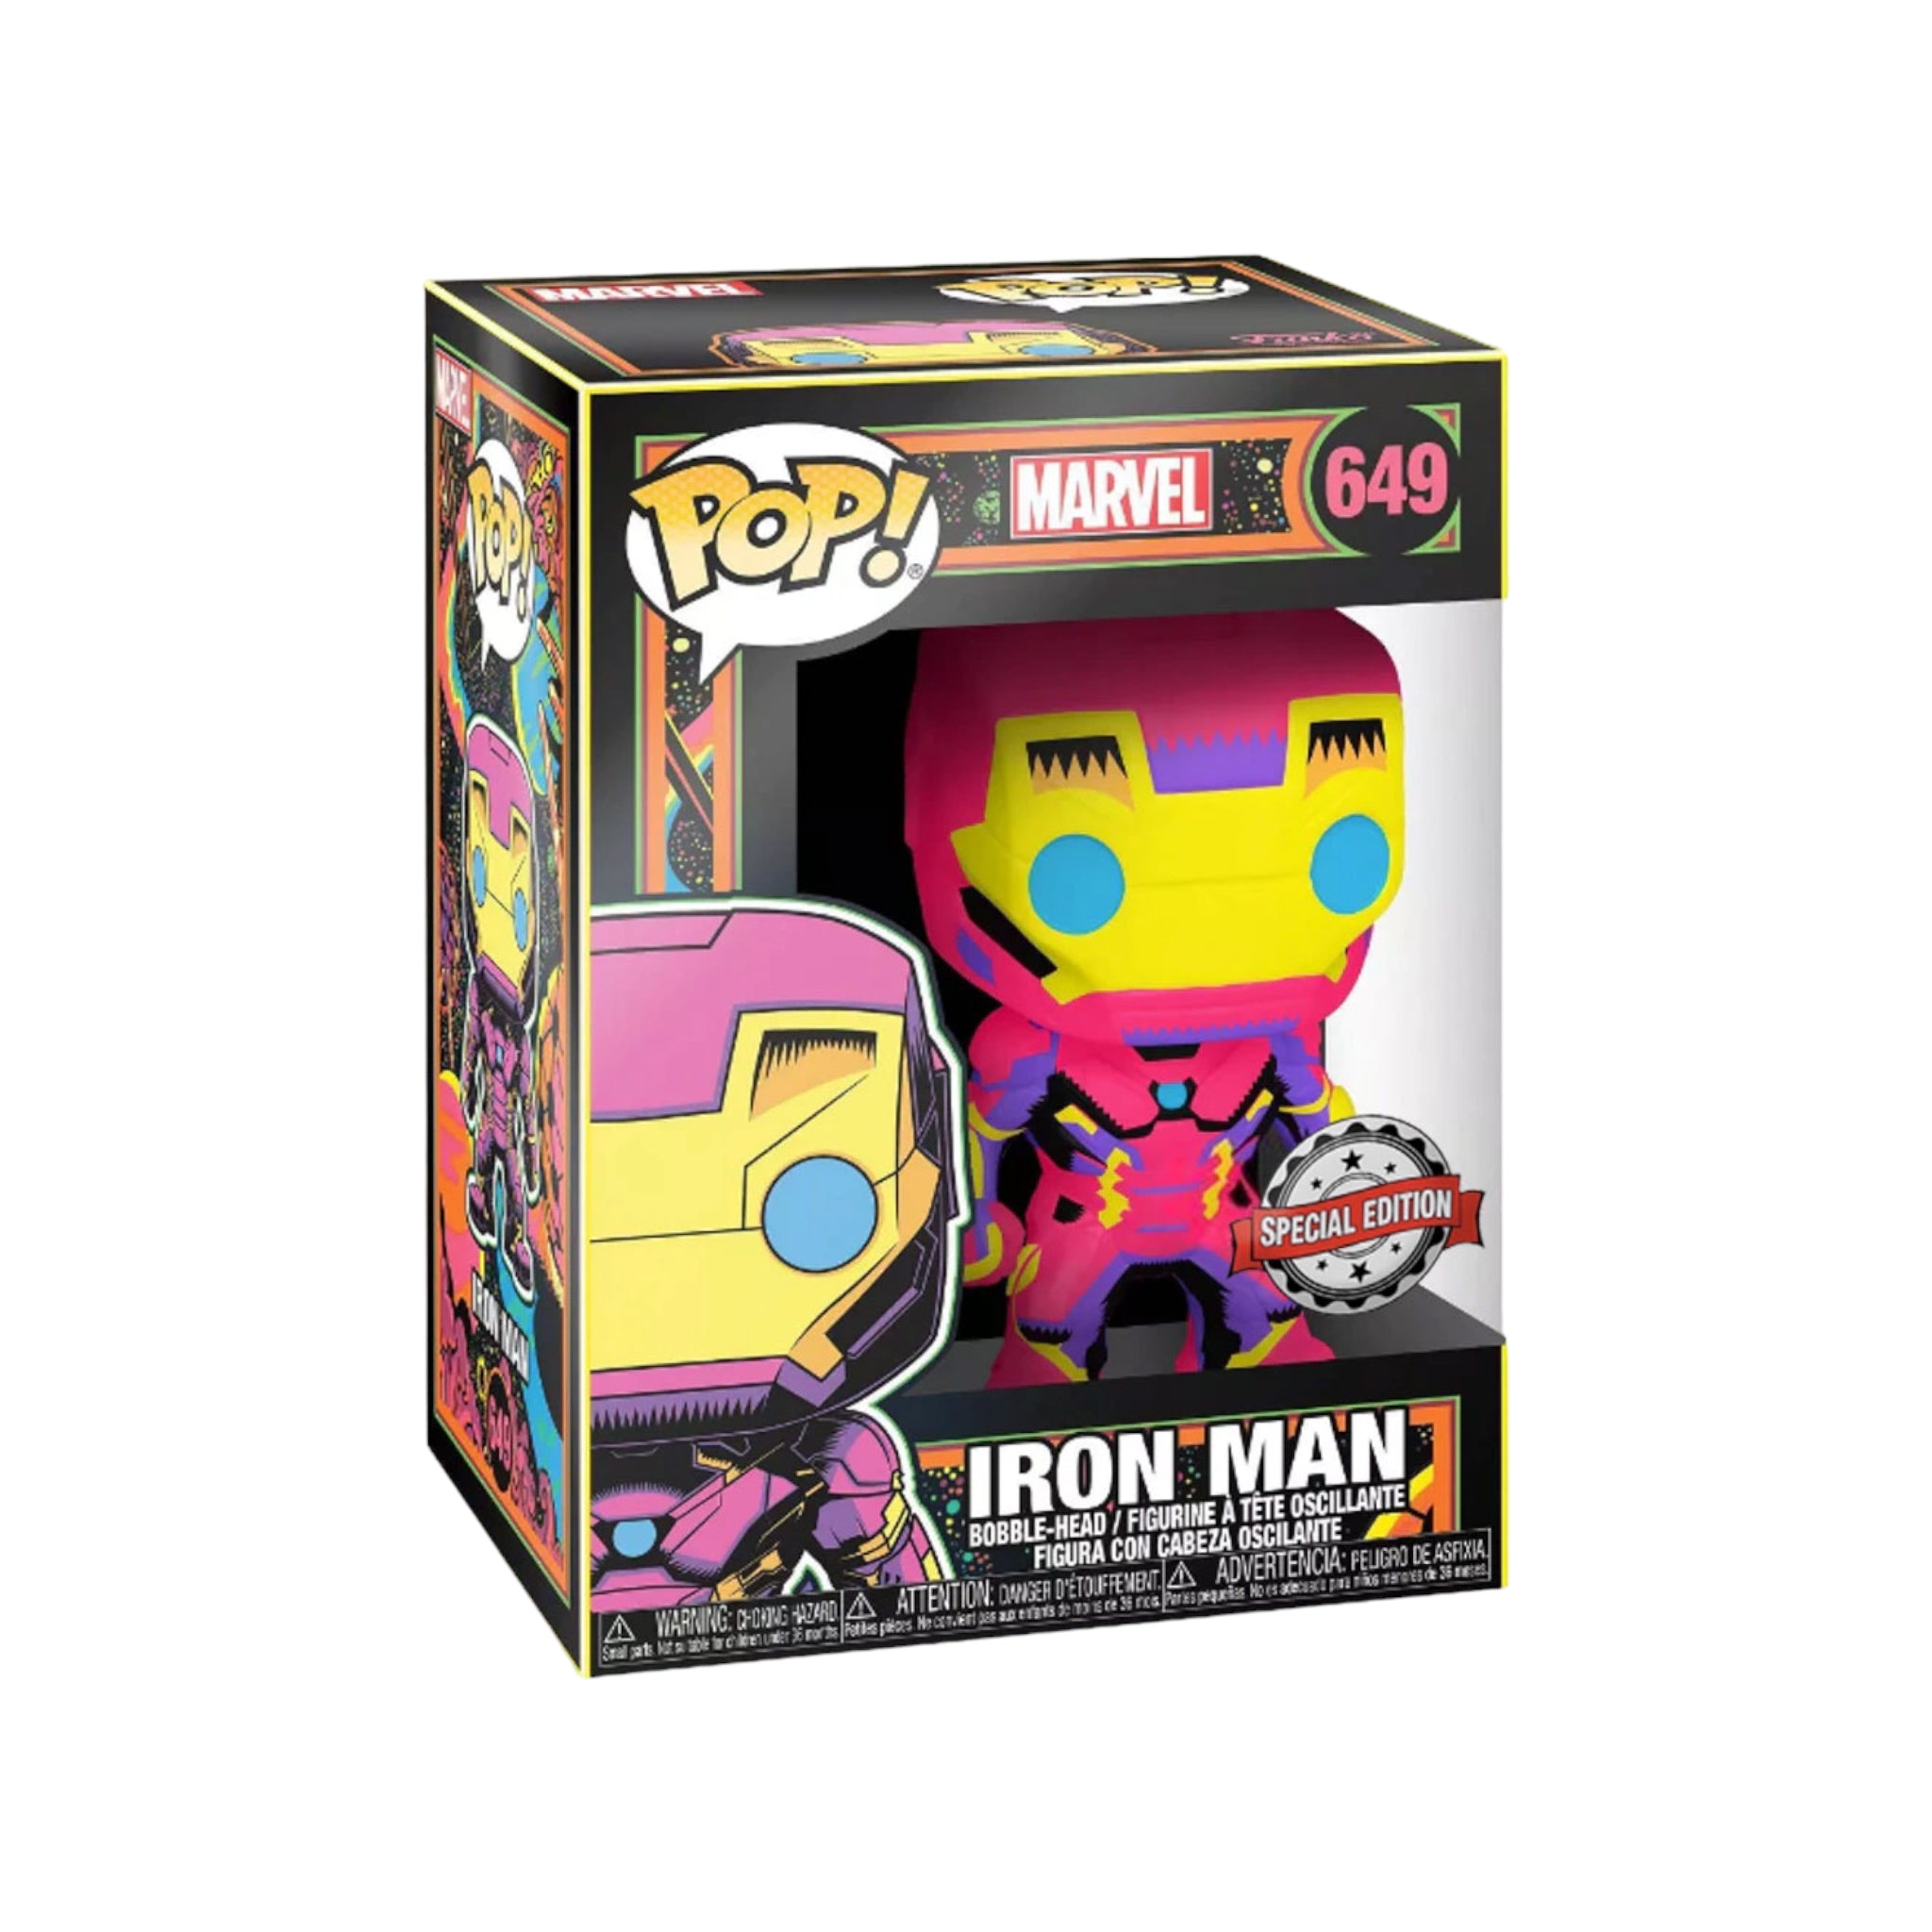 Iron Man #649 (Black Light) Funko Pop! - Marvel - Special Edition